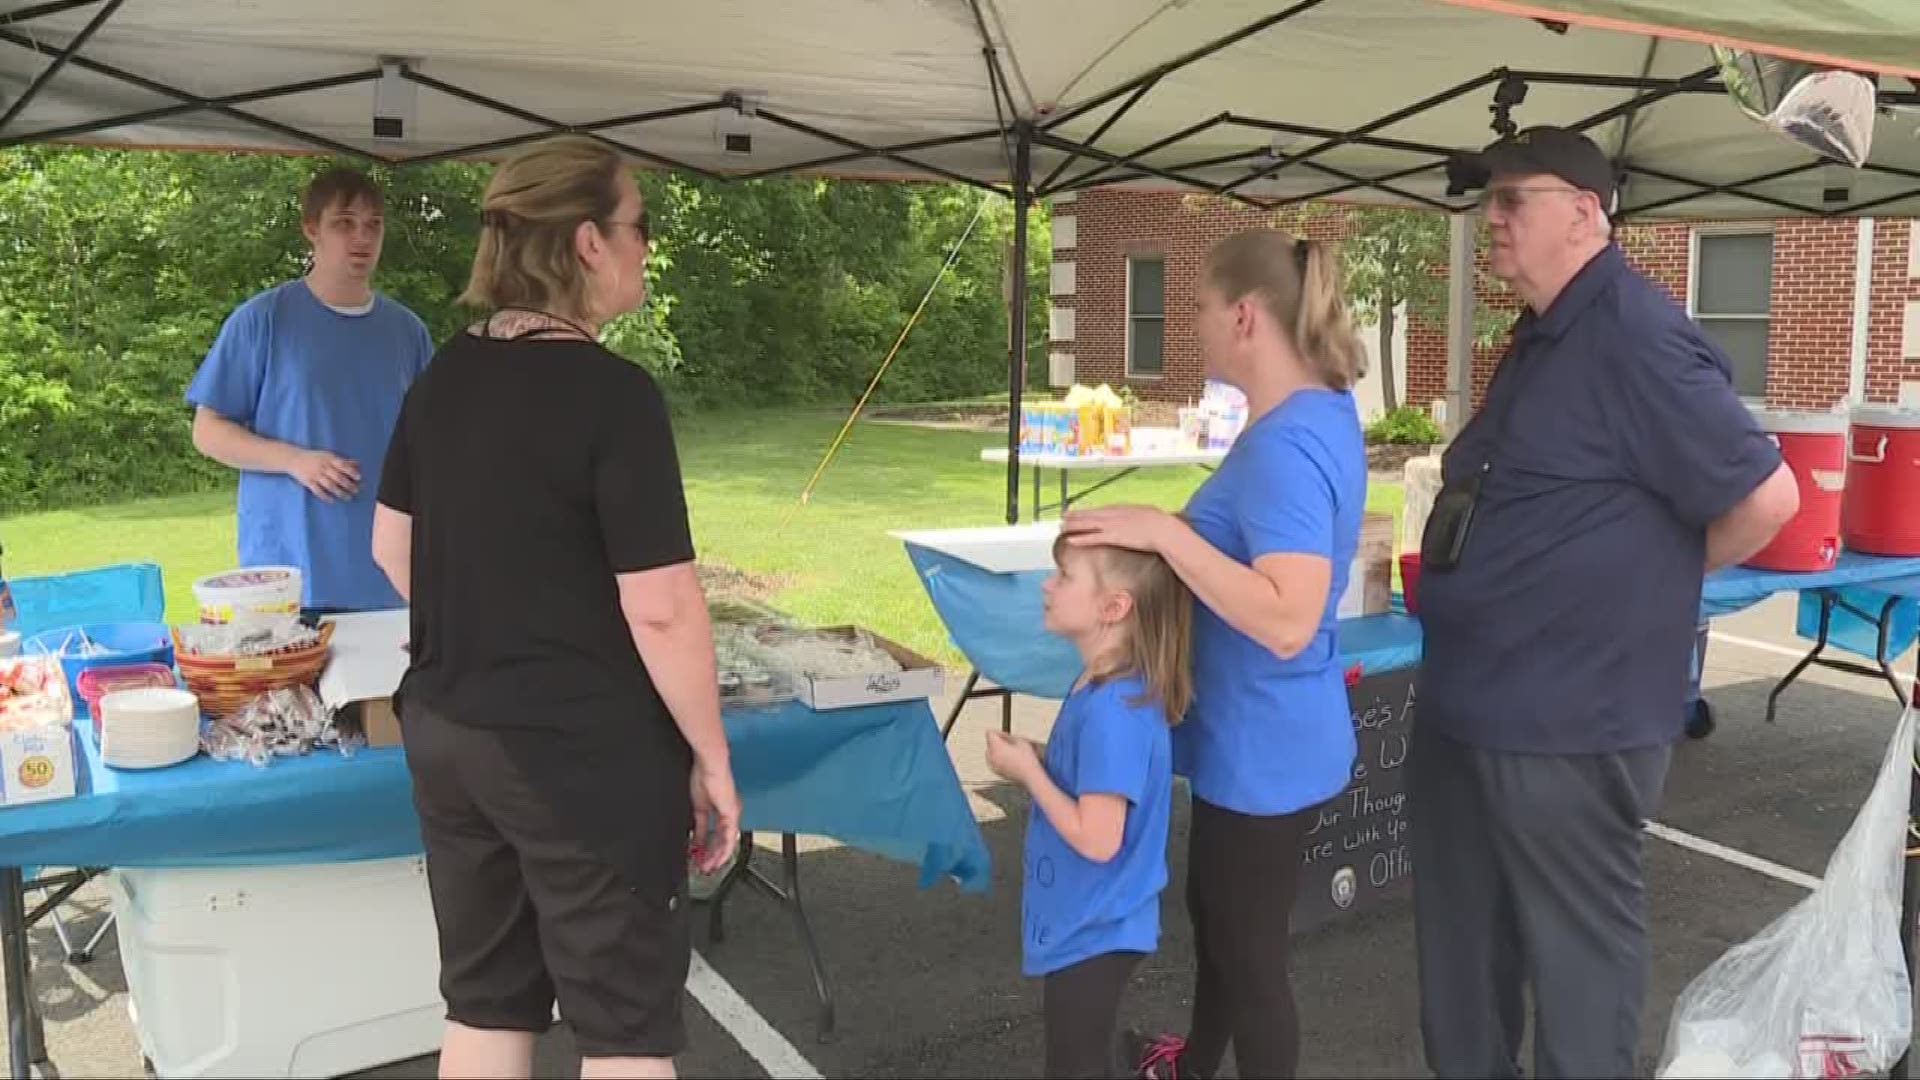 Lemonade stand, bake sale to raise money for injured Amherst officer